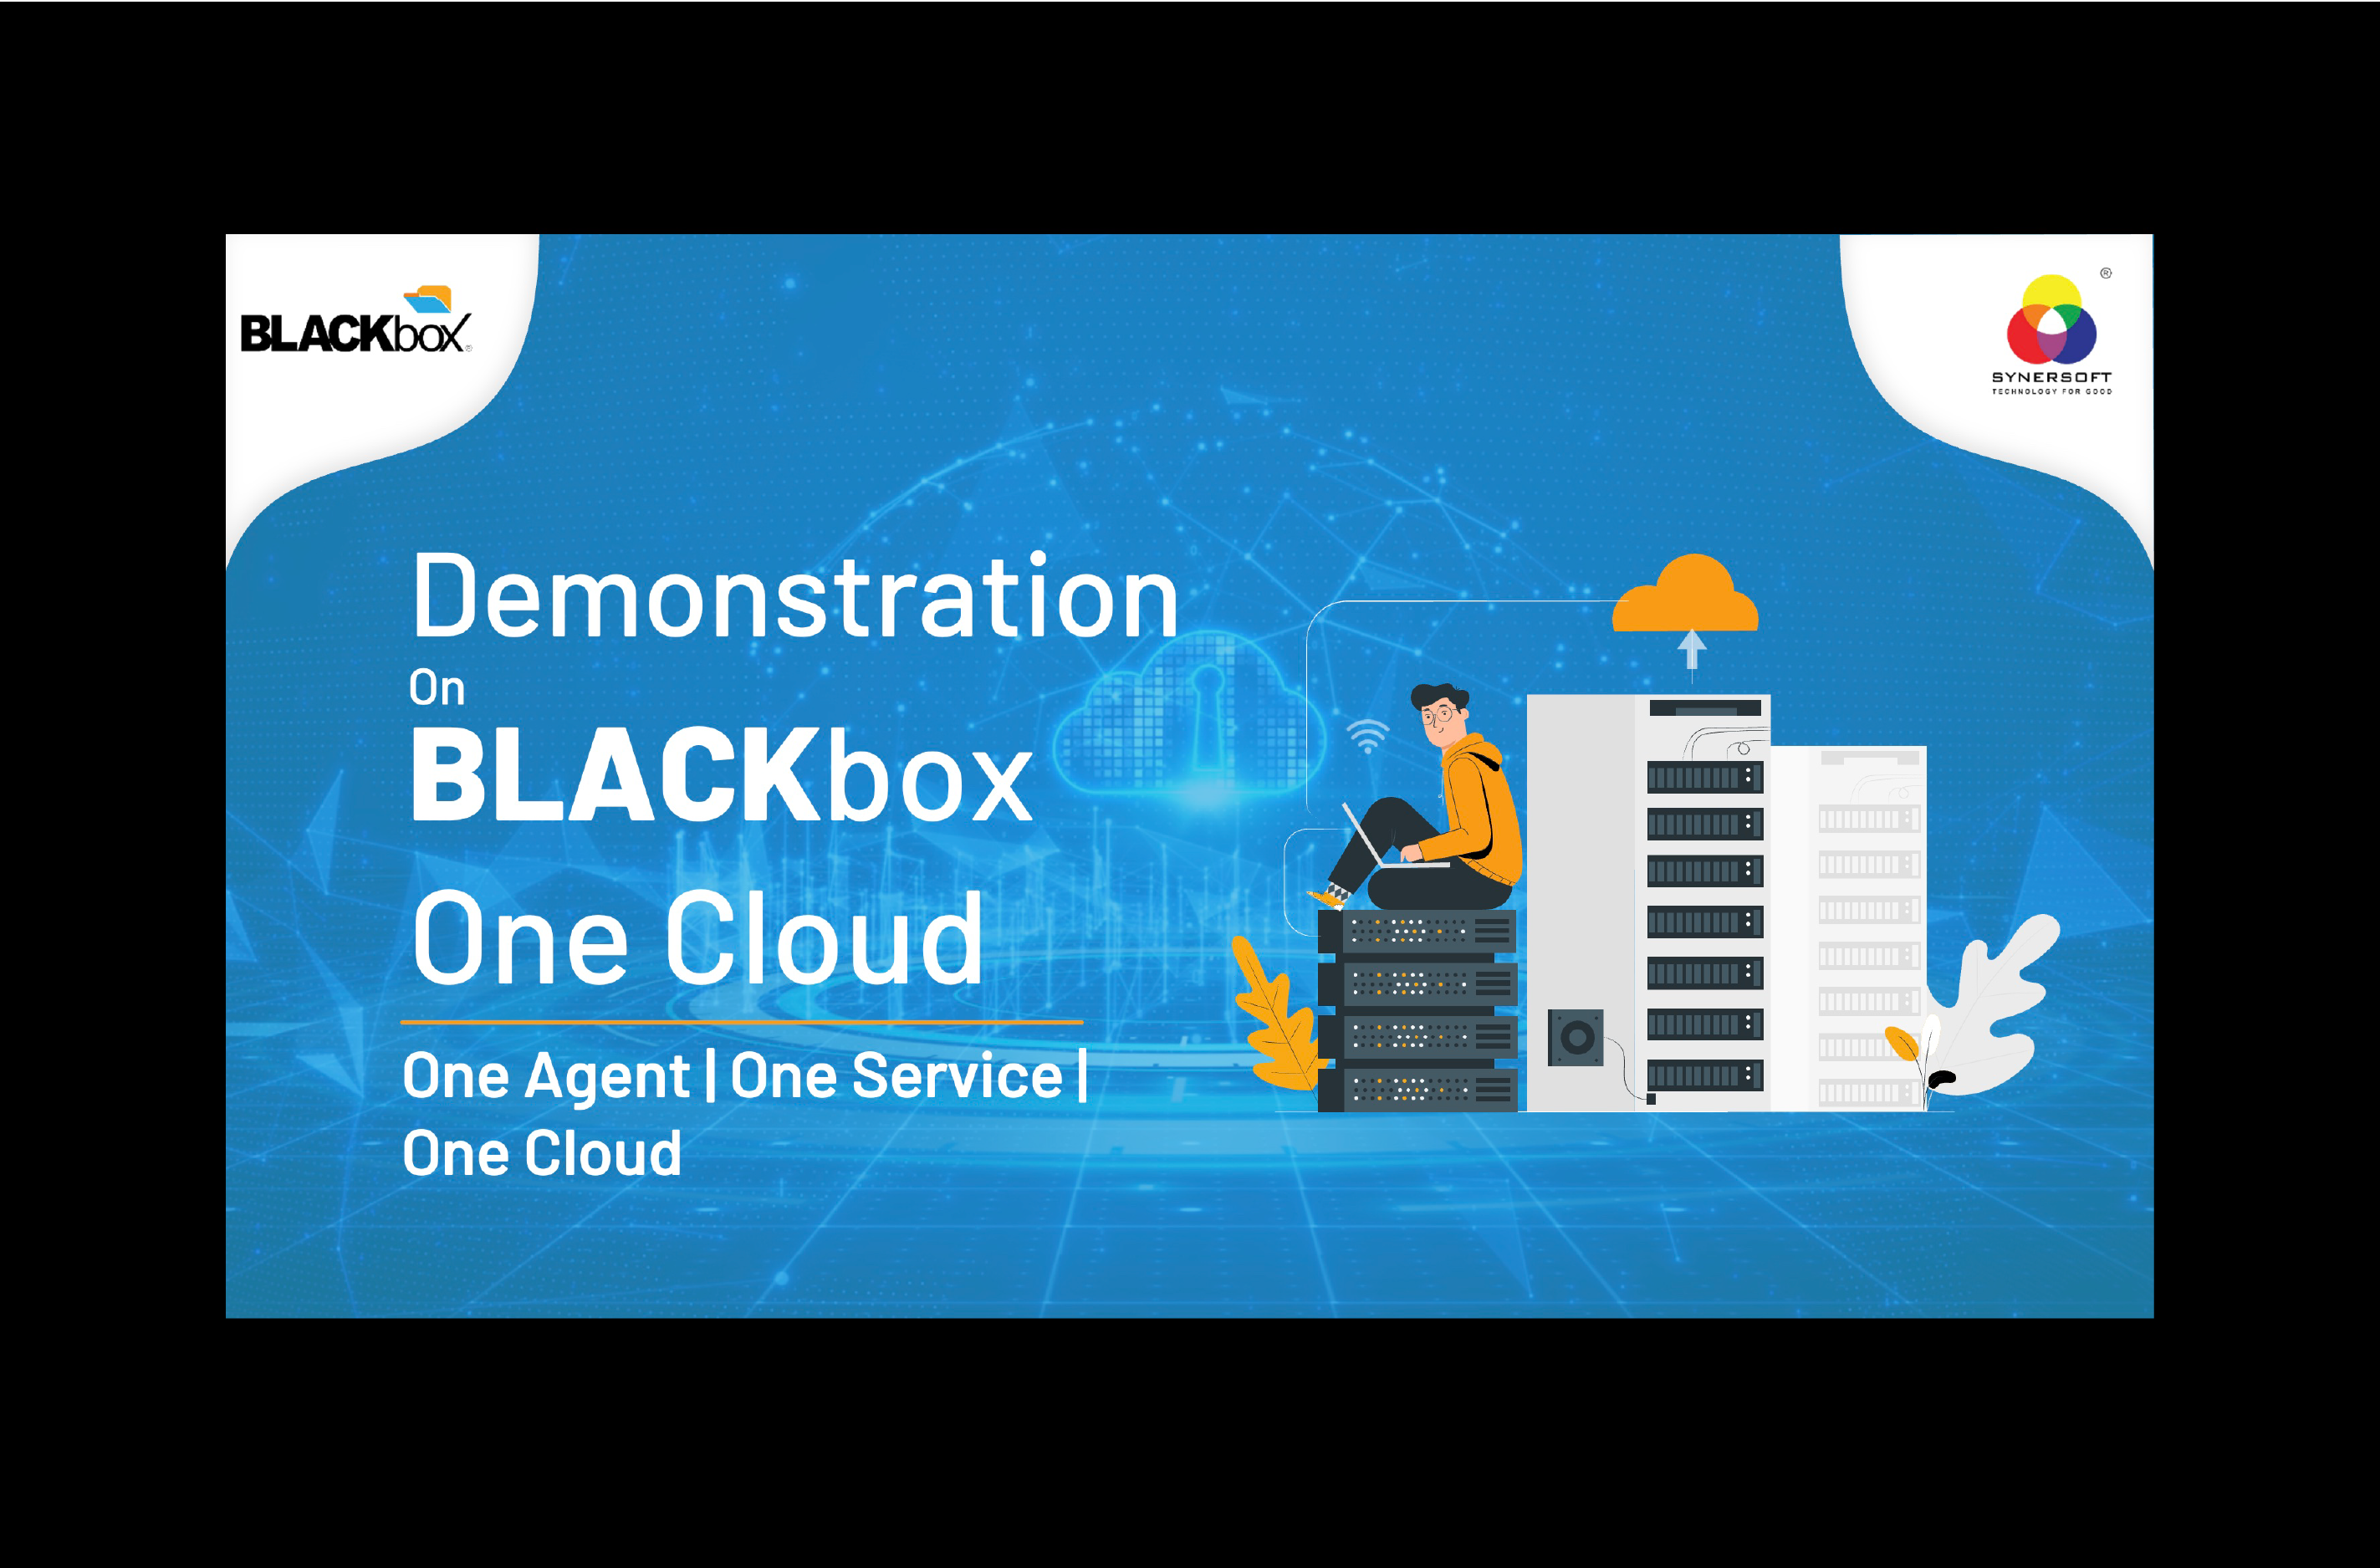 Utilize the full power of cloud - BLACKbox One Cloud